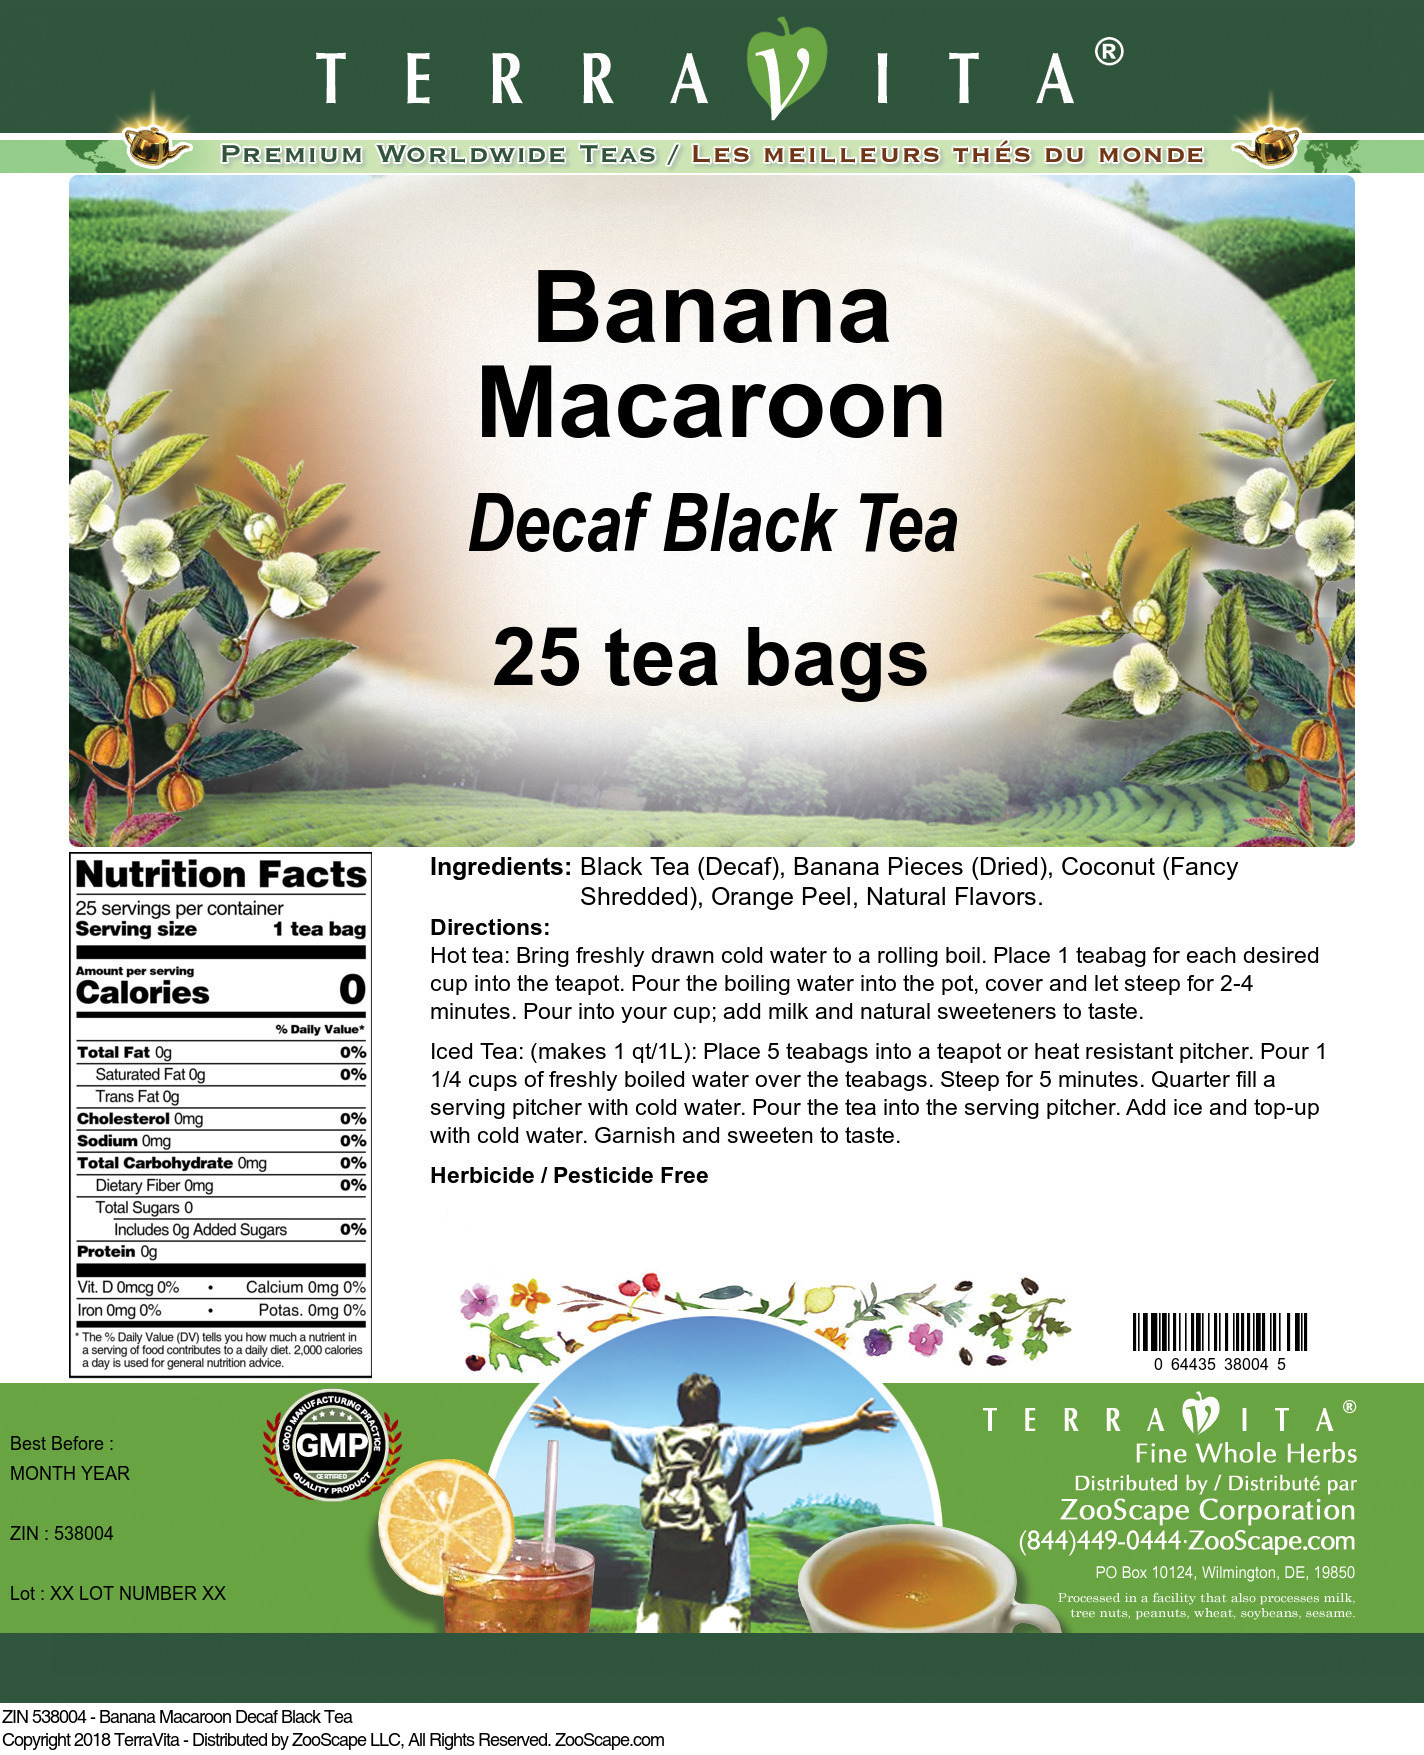 Banana Macaroon Decaf Black Tea - Label